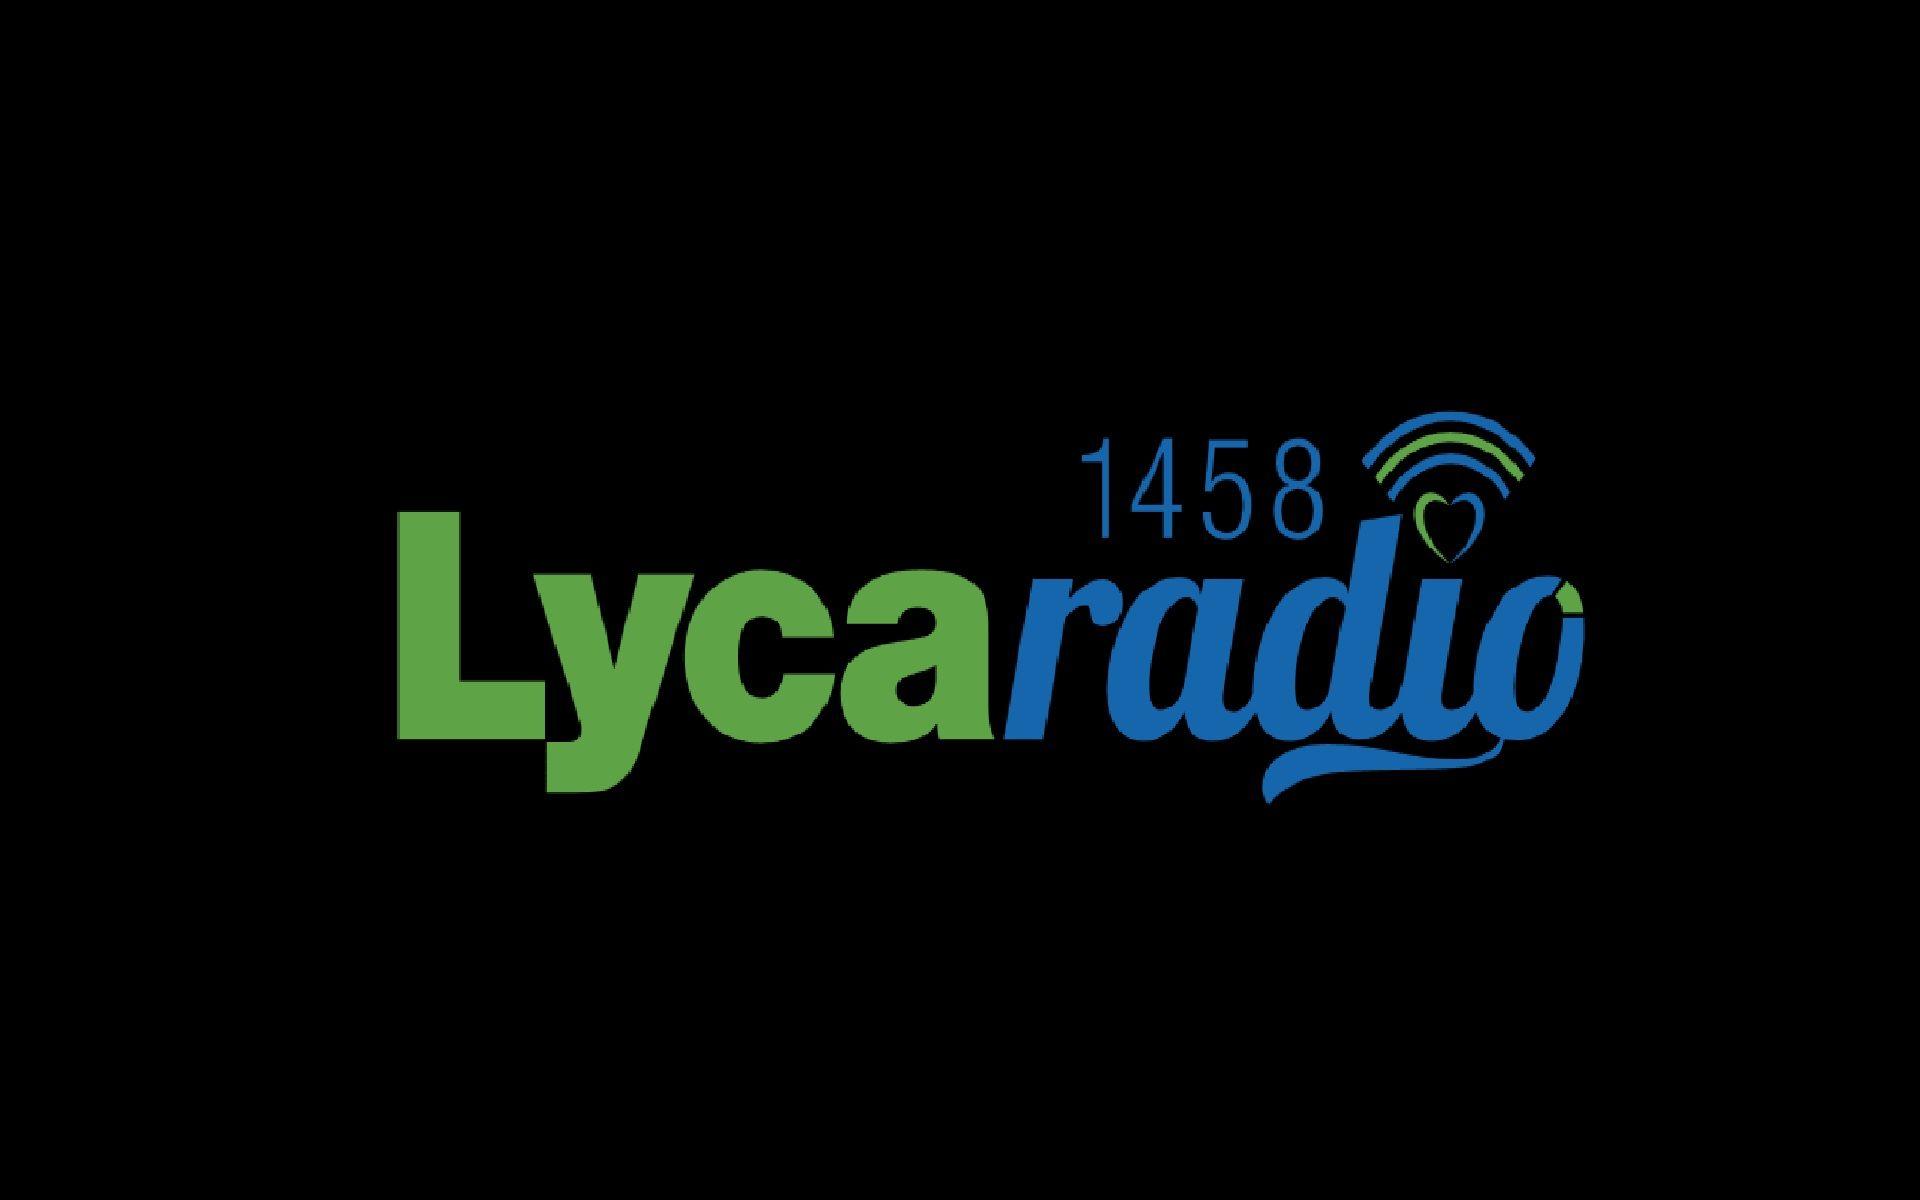 Green Music Radio Logo - Ofcom gives Lyca Radio nod to drop local news. BizAsia. Media